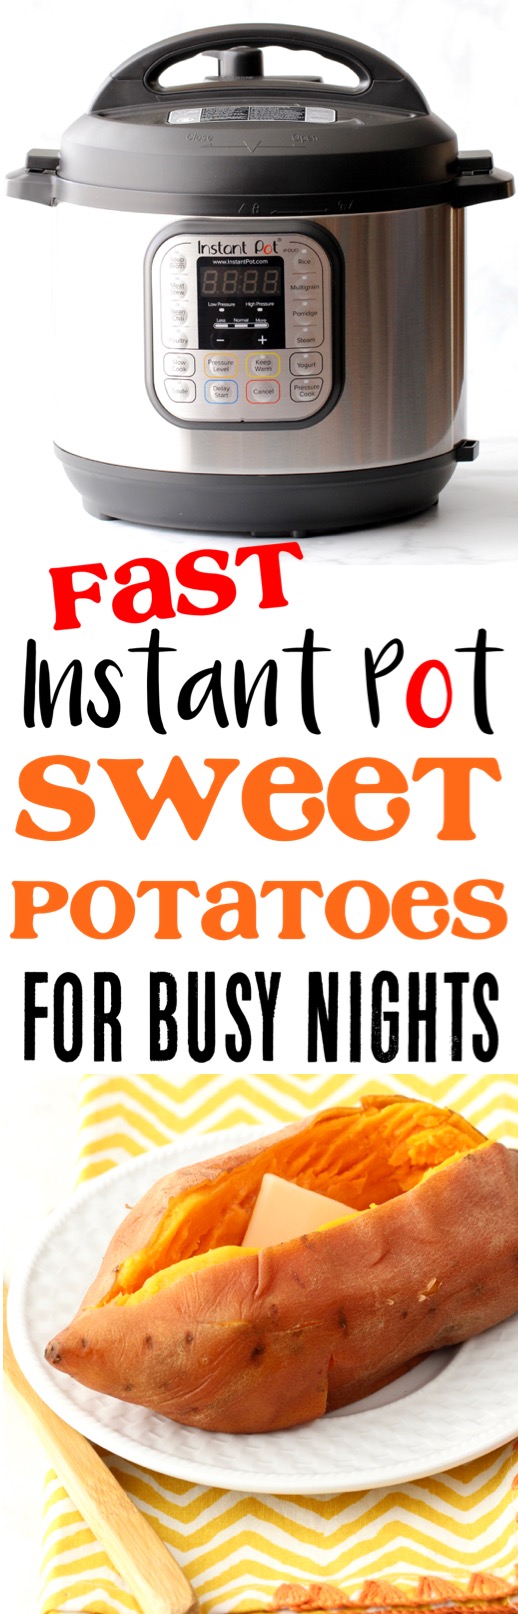 Instant Pot Recipes Healthy Easy Sweet Potatoes